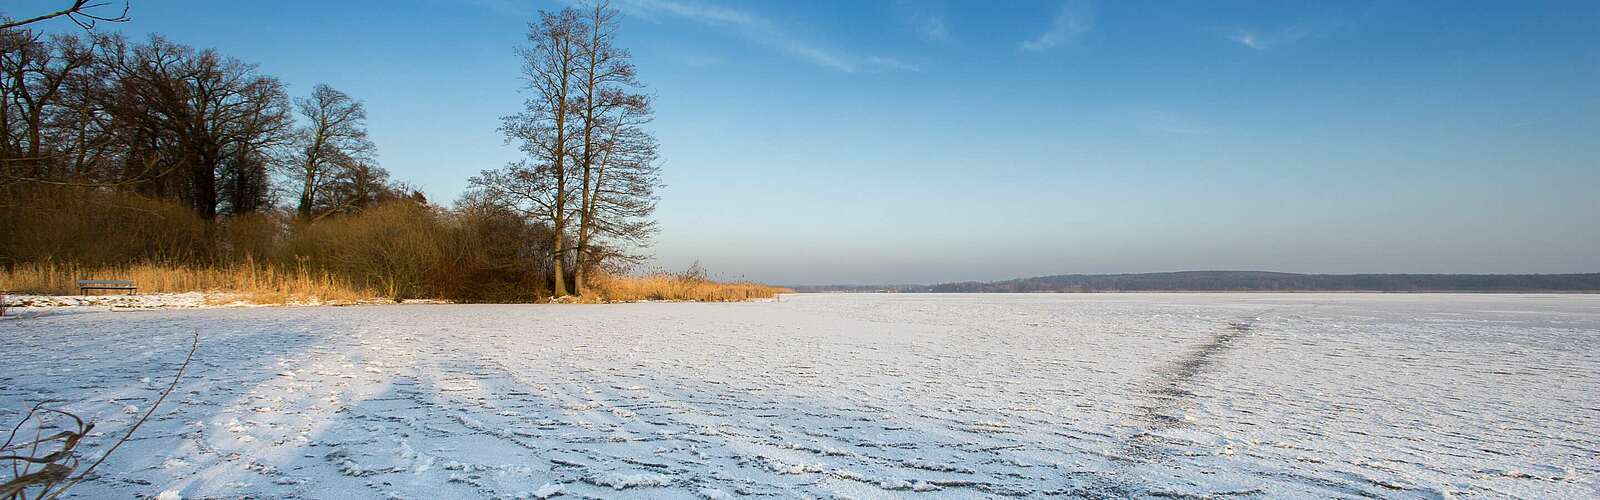 Winter im Havelland,
        
    

        Picture: TMB-Fotoarchiv/Yorck Maecke